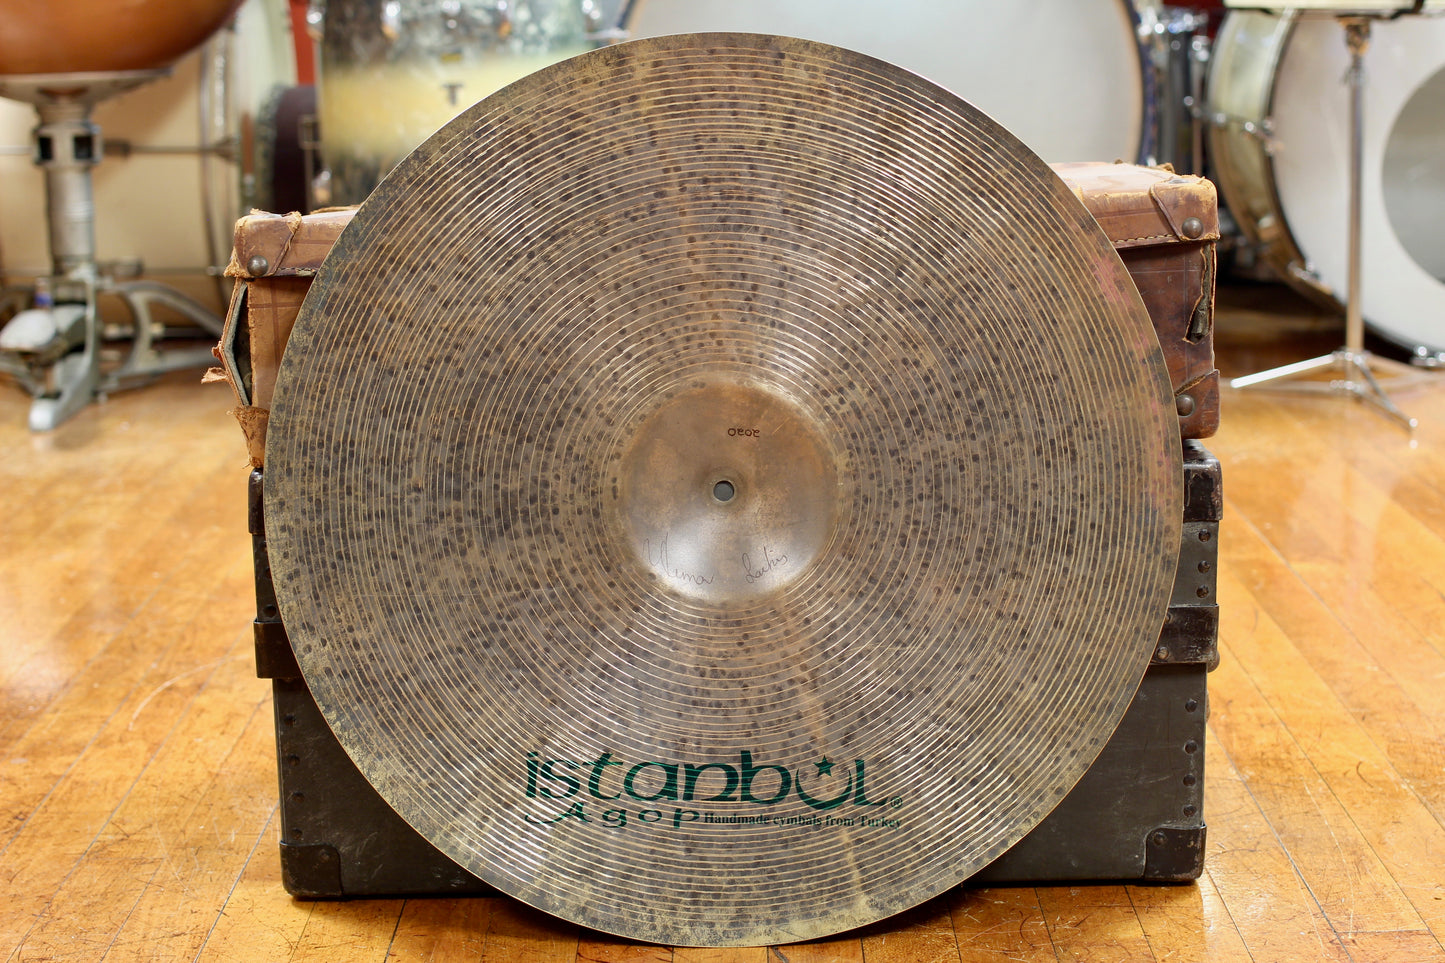 Istanbul Agop Signature 22" Ride Cymbal